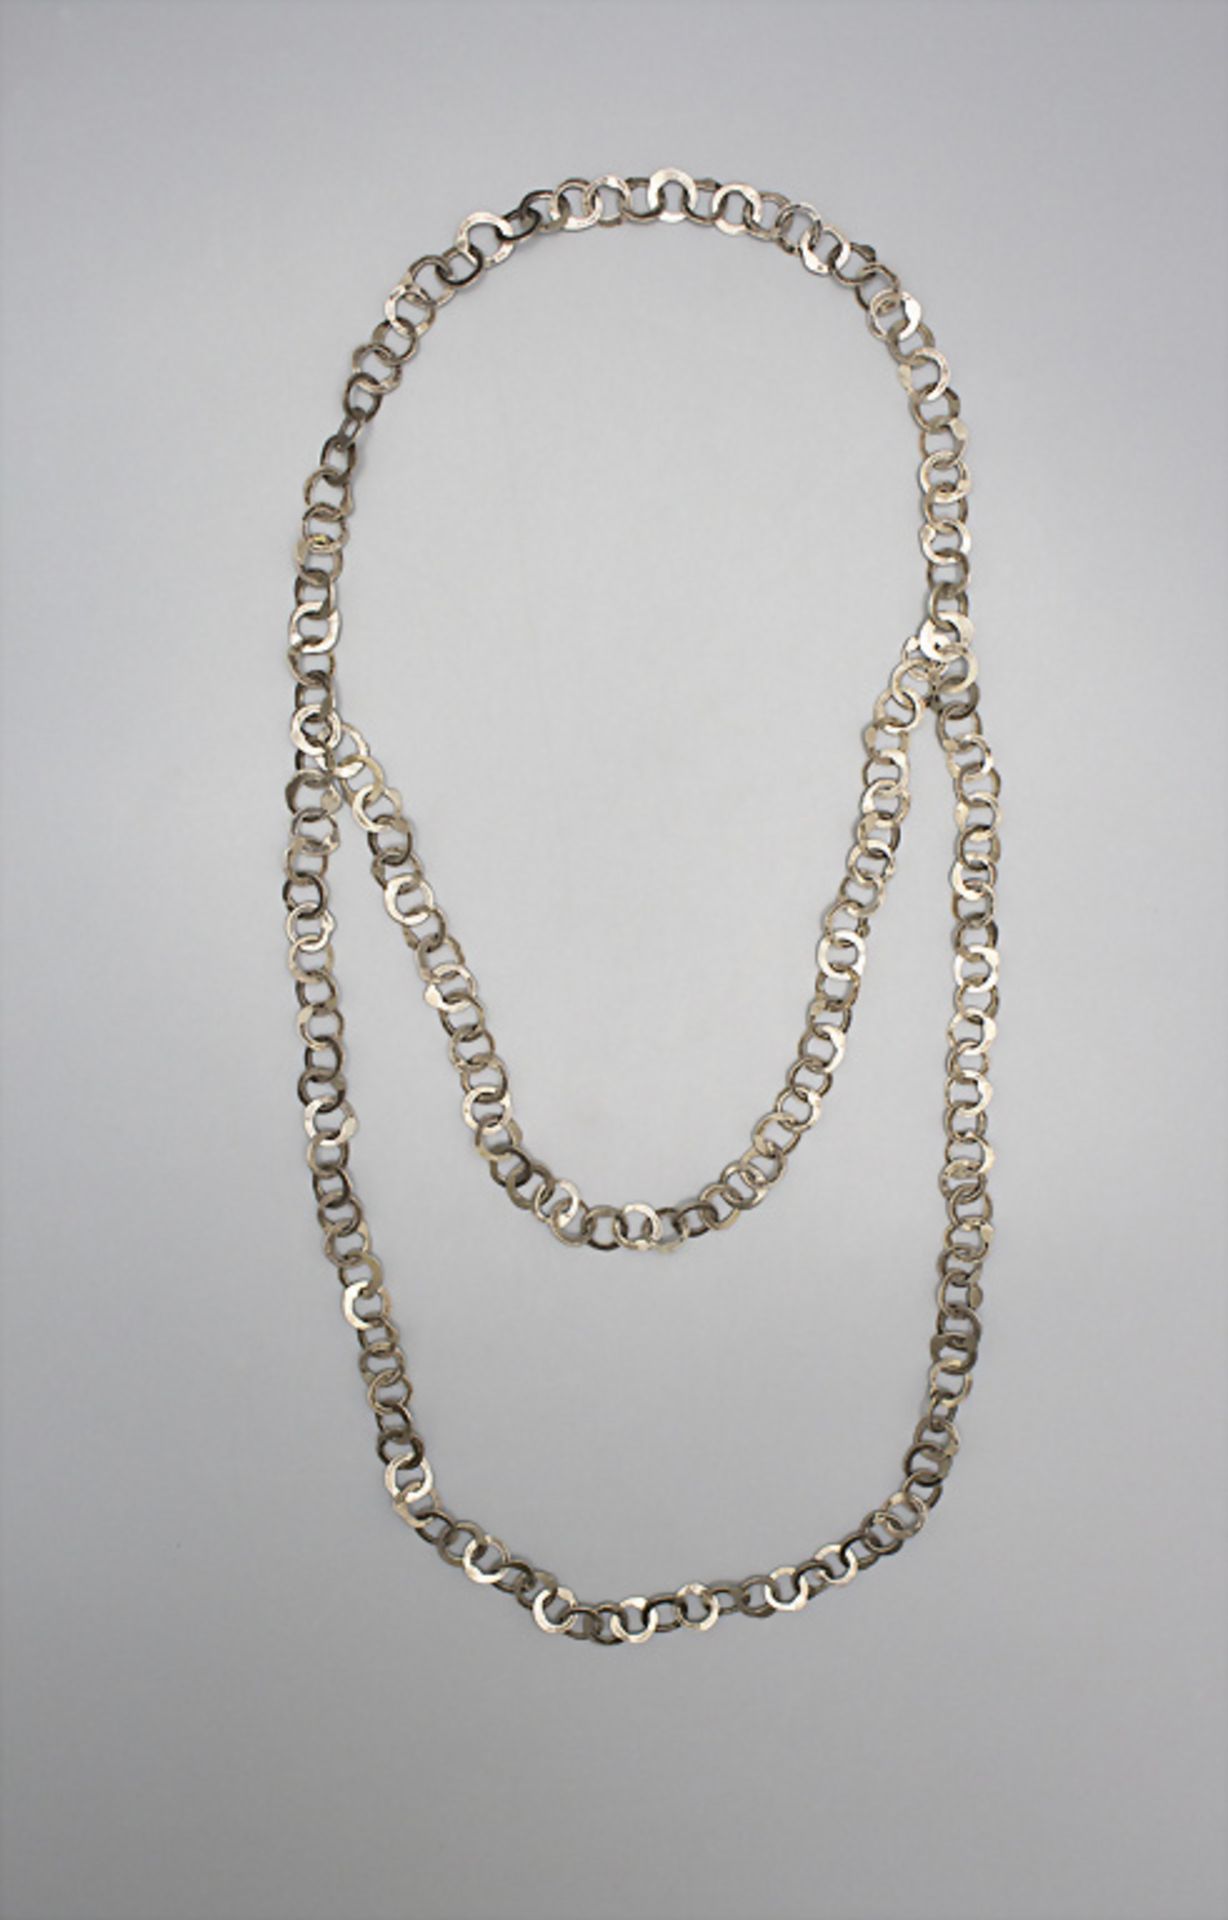 Vintage Silberkette / A vintage silver necklace, wohl 1970er Jahre - Image 2 of 3